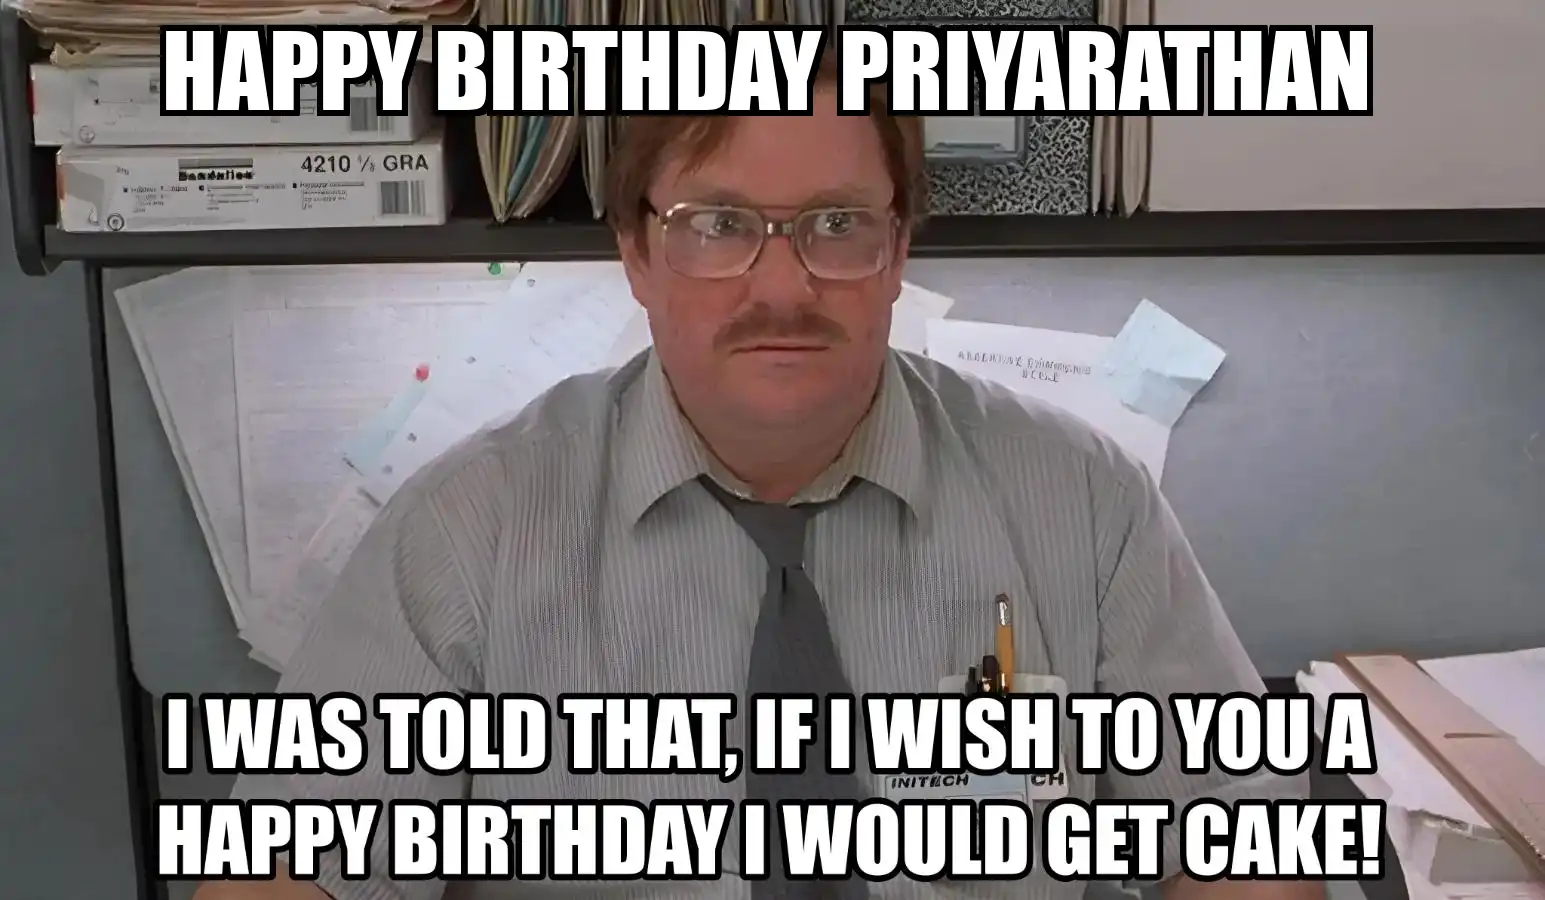 Happy Birthday Priyarathan I Would Get A Cake Meme